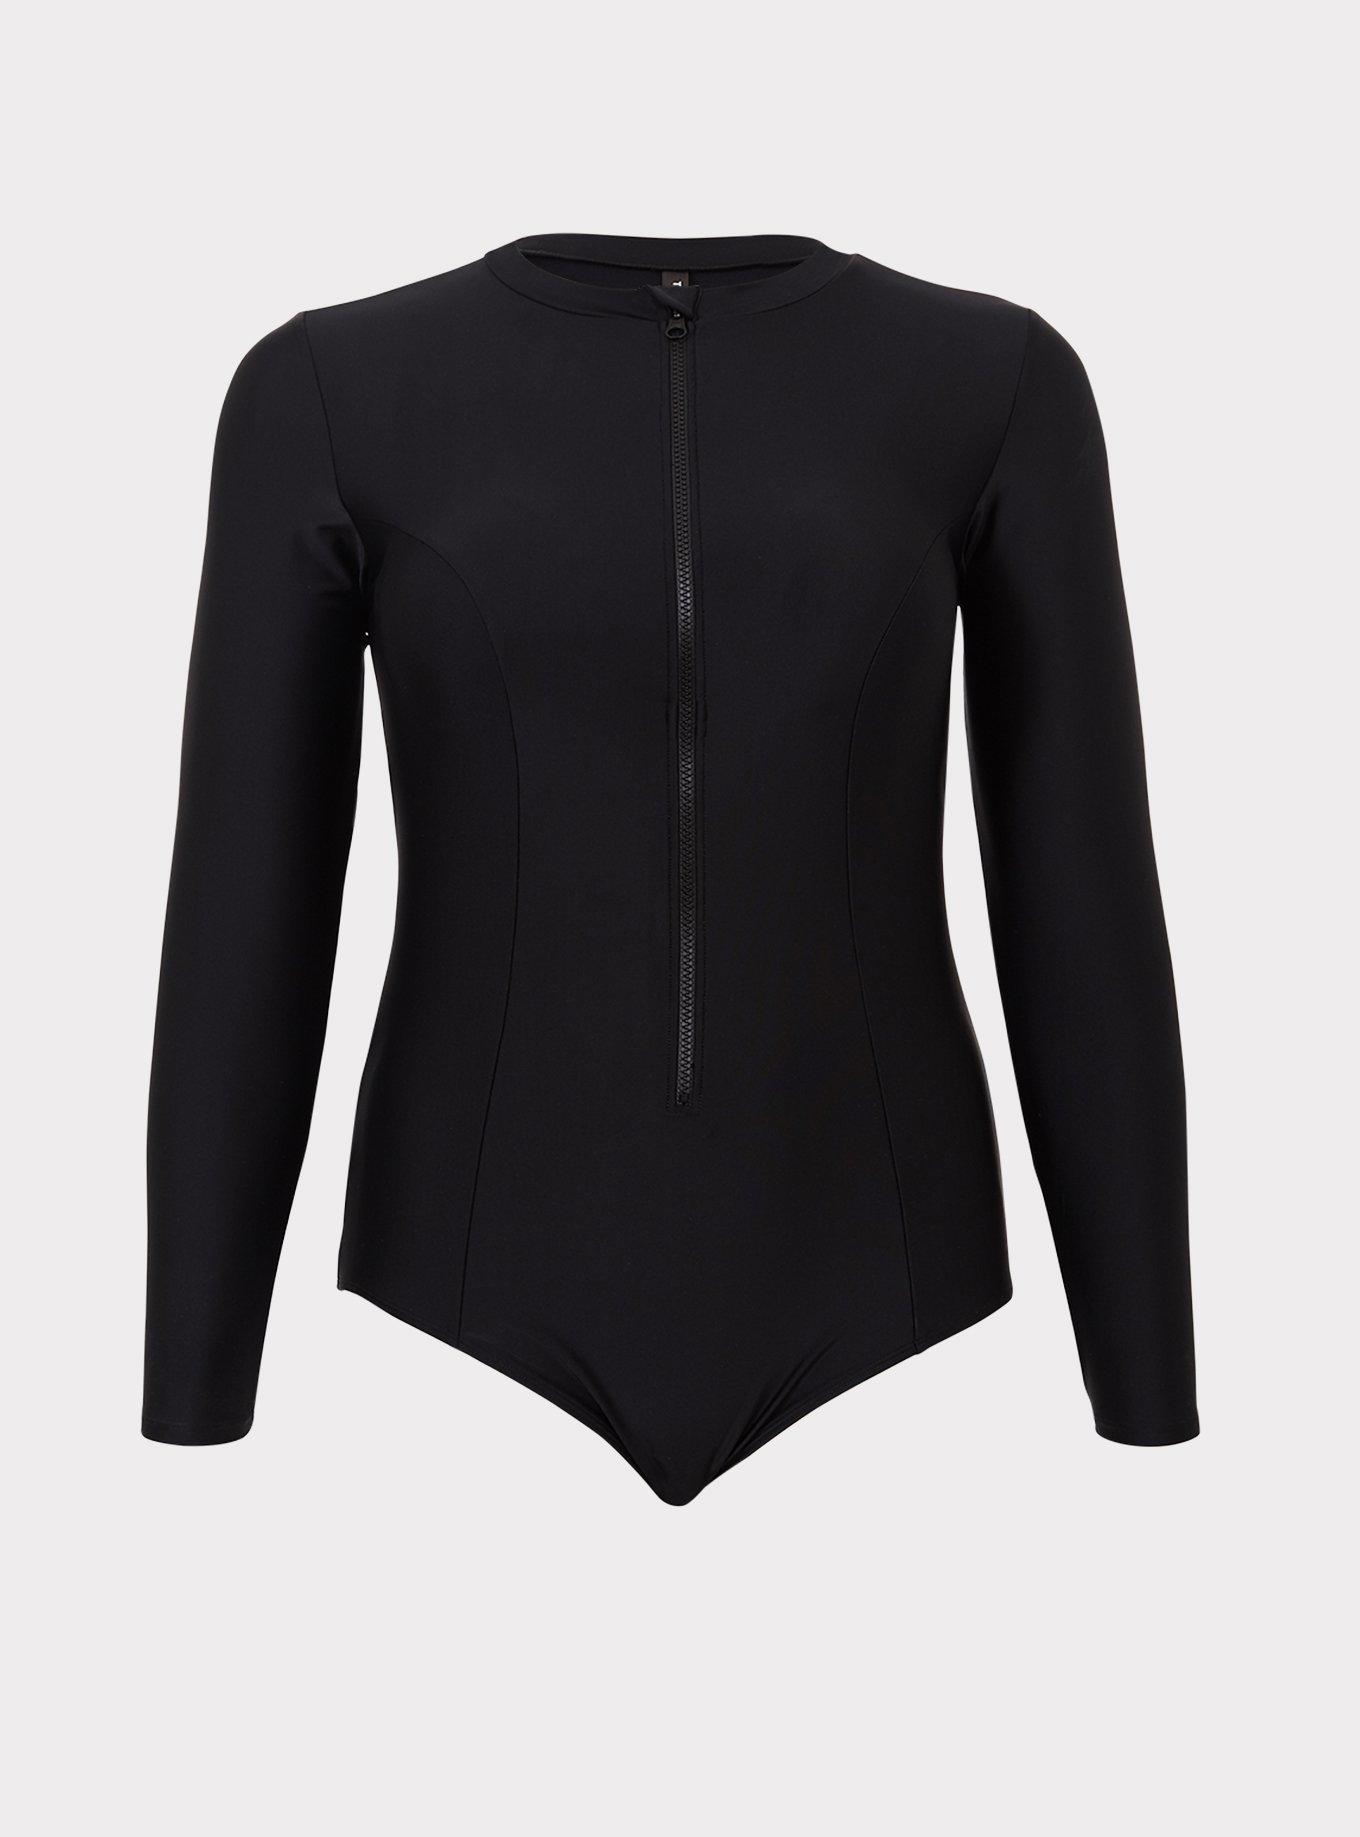 Torrid Sexy Black Premium Long Sleeve Catsuit Plus Size 1X, 14/16